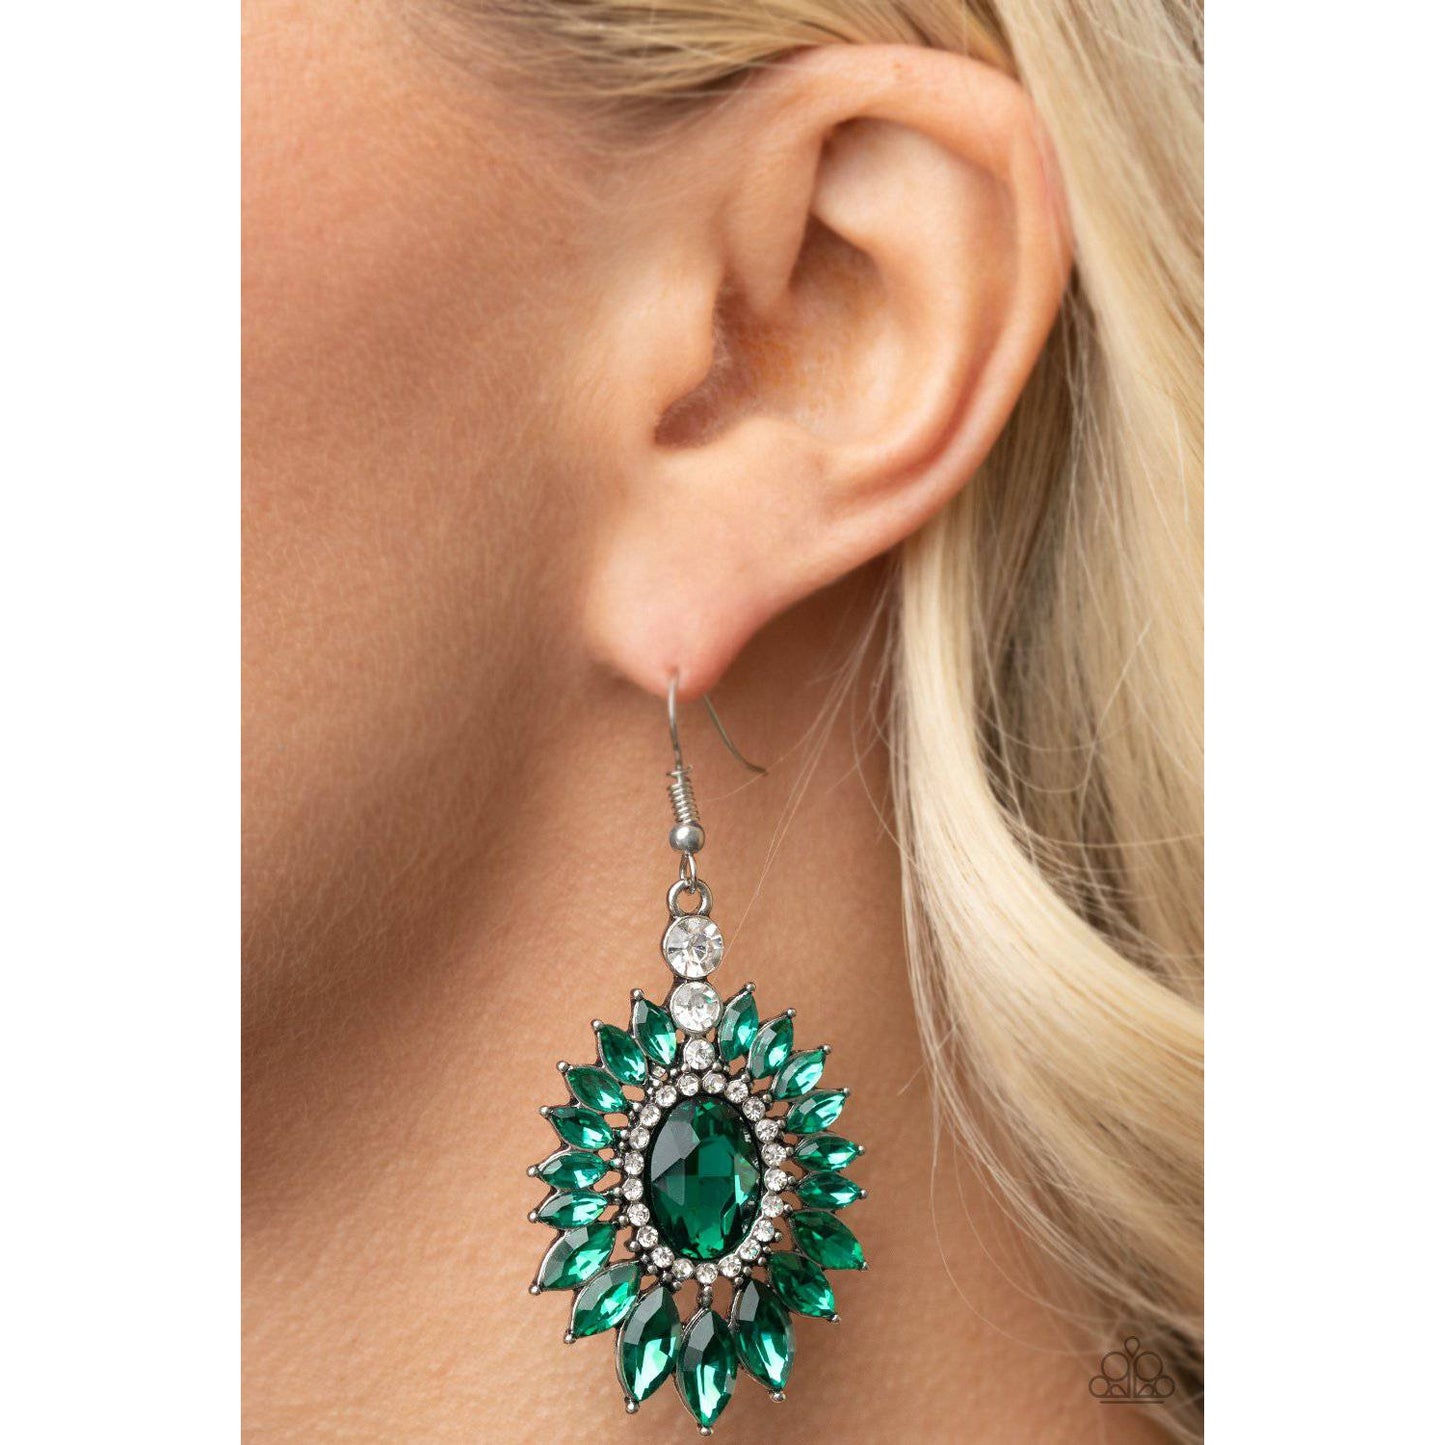 Big Time Twinkle - Green Rhinestone Earrings - Paparazzi Accessories - GlaMarous Titi Jewels